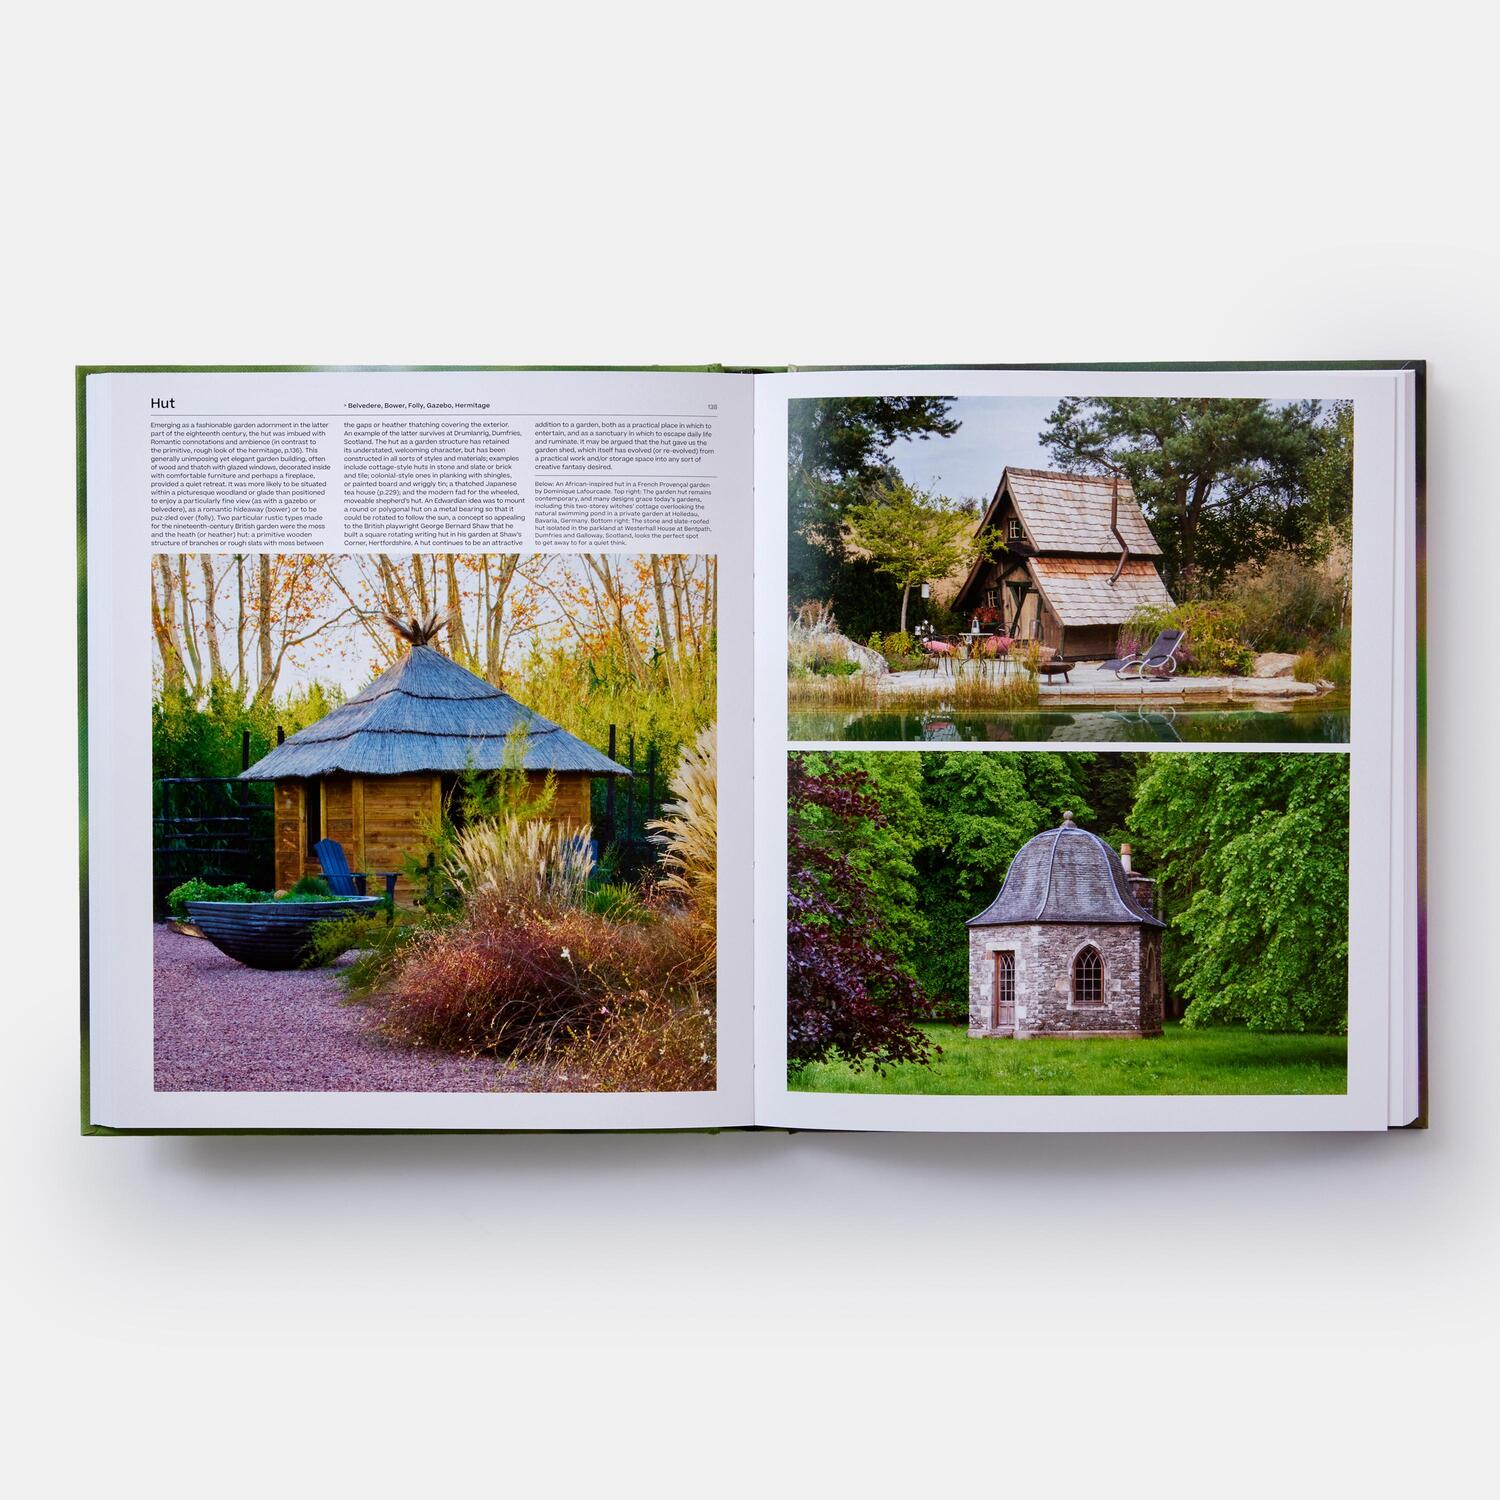 Bild: 9781838666163 | The Garden, Elements and Styles | Toby Musgrave | Buch | Englisch